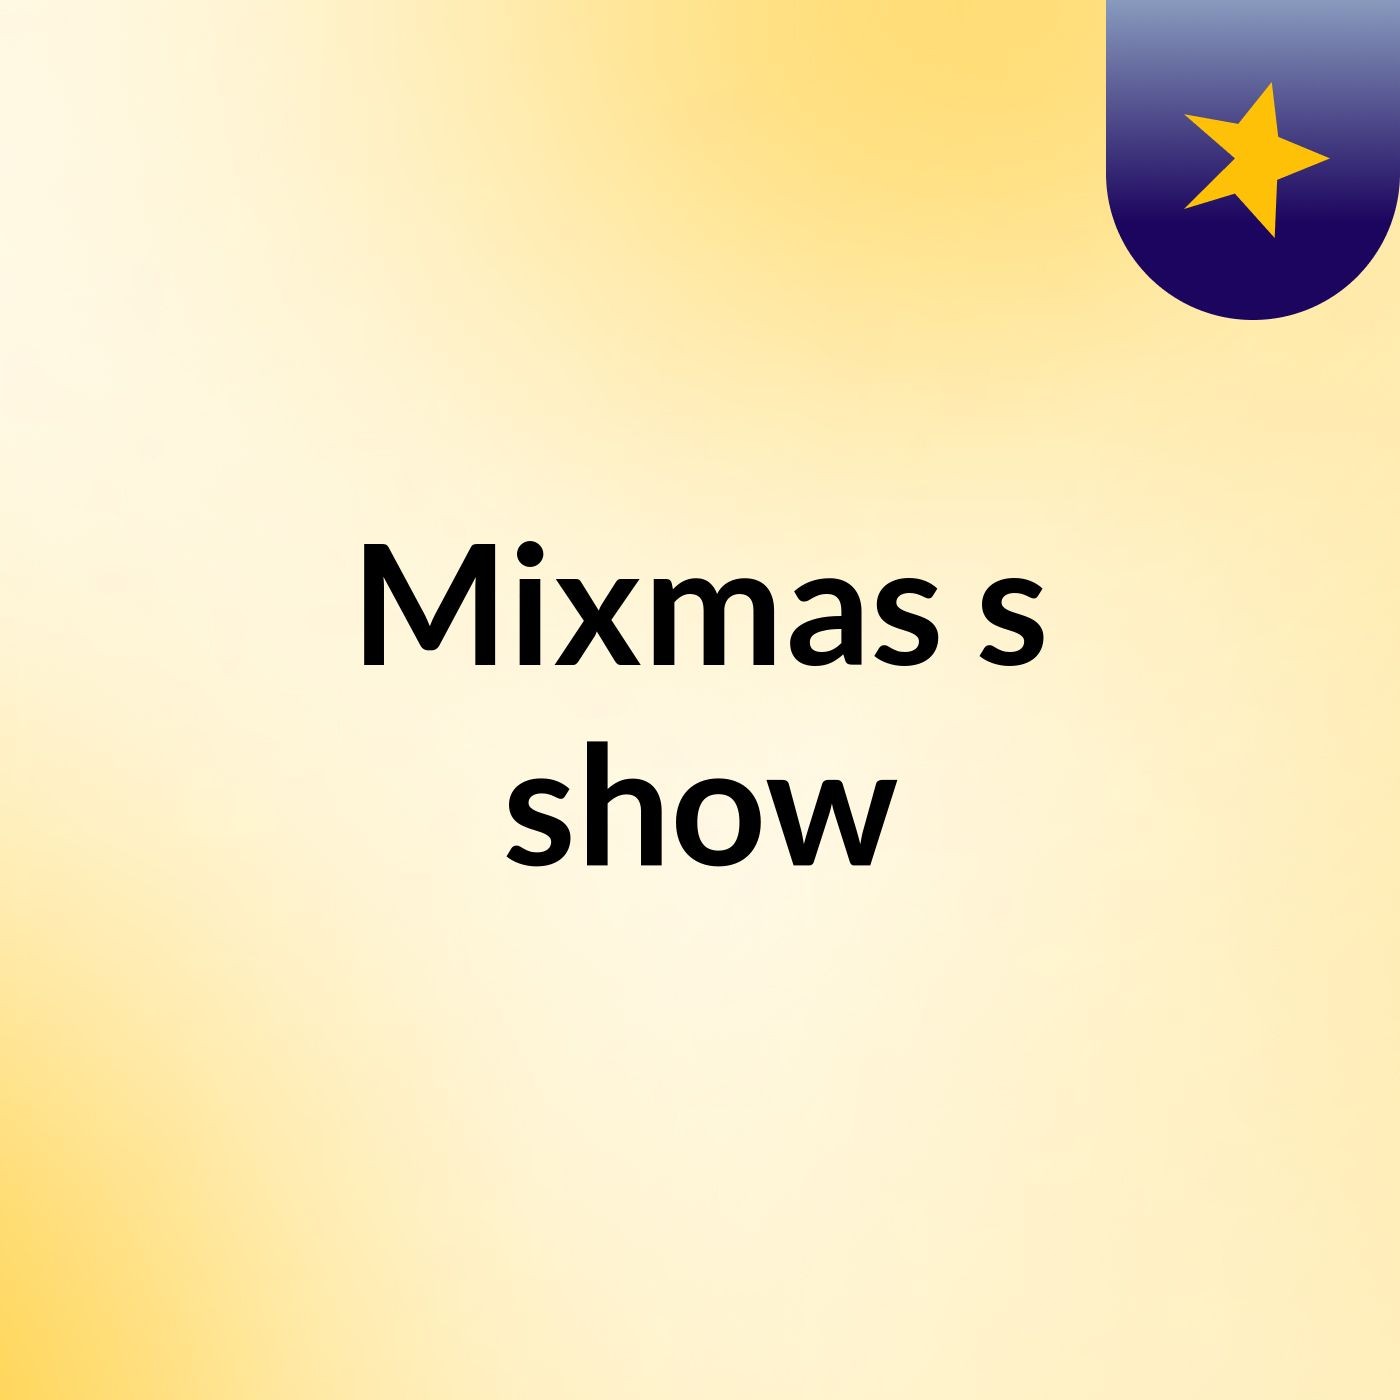 Mixmas's show